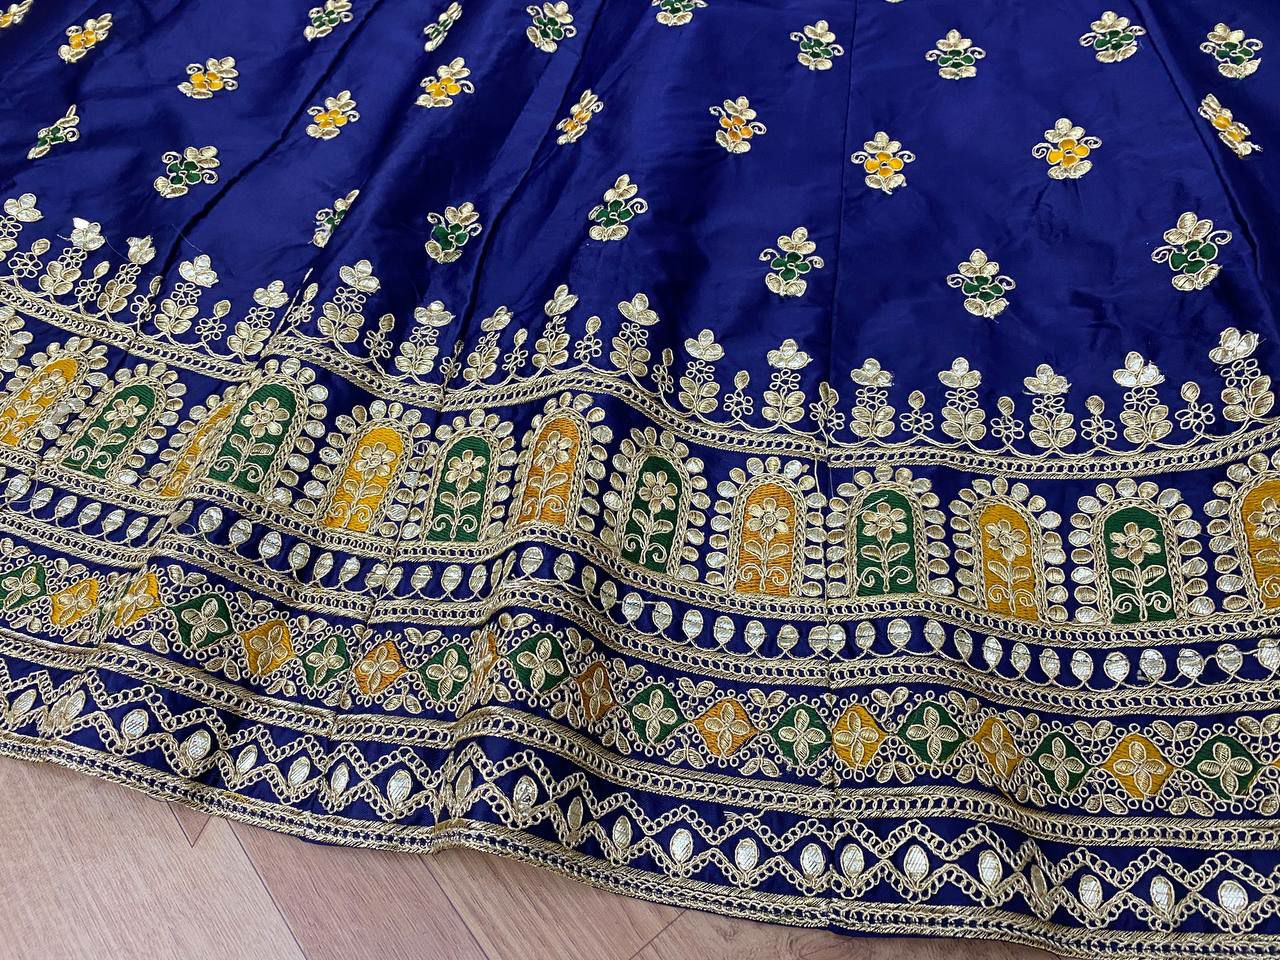 Blue Indian Lehenga Choli With Yellow Net Dupatta